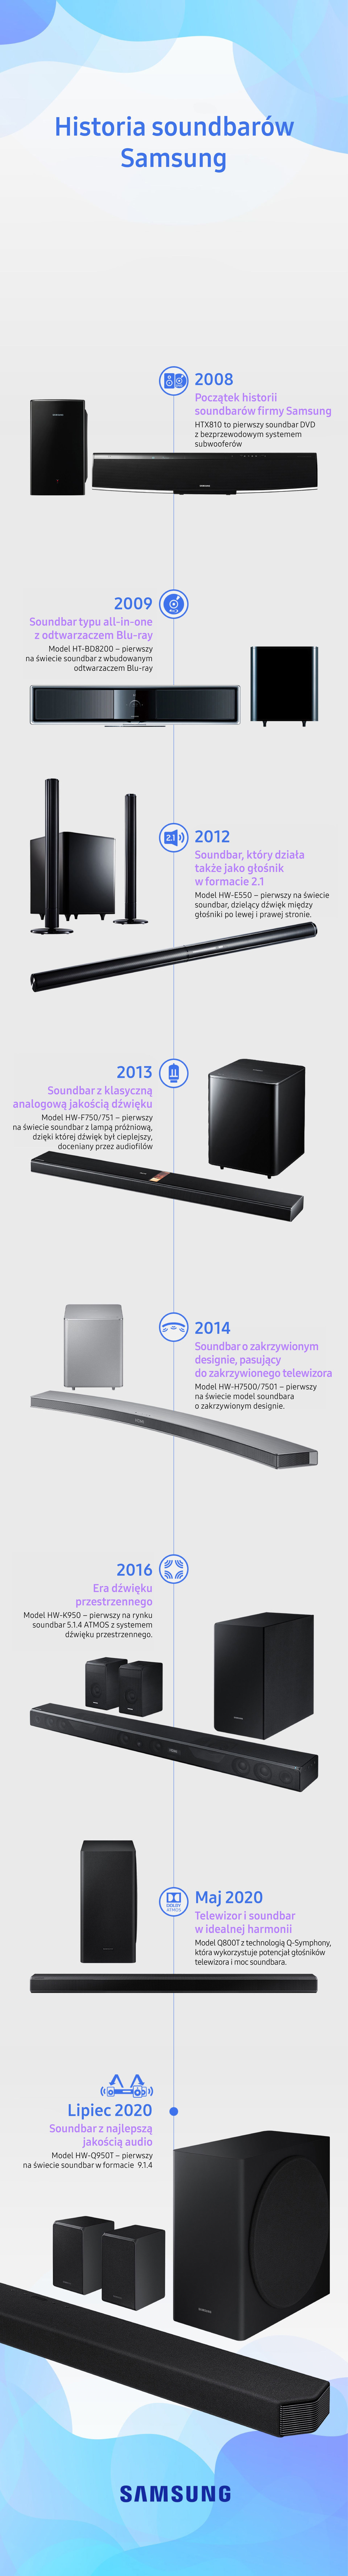 Infographic_History-of-Samsung-Soundbars_0902_PL